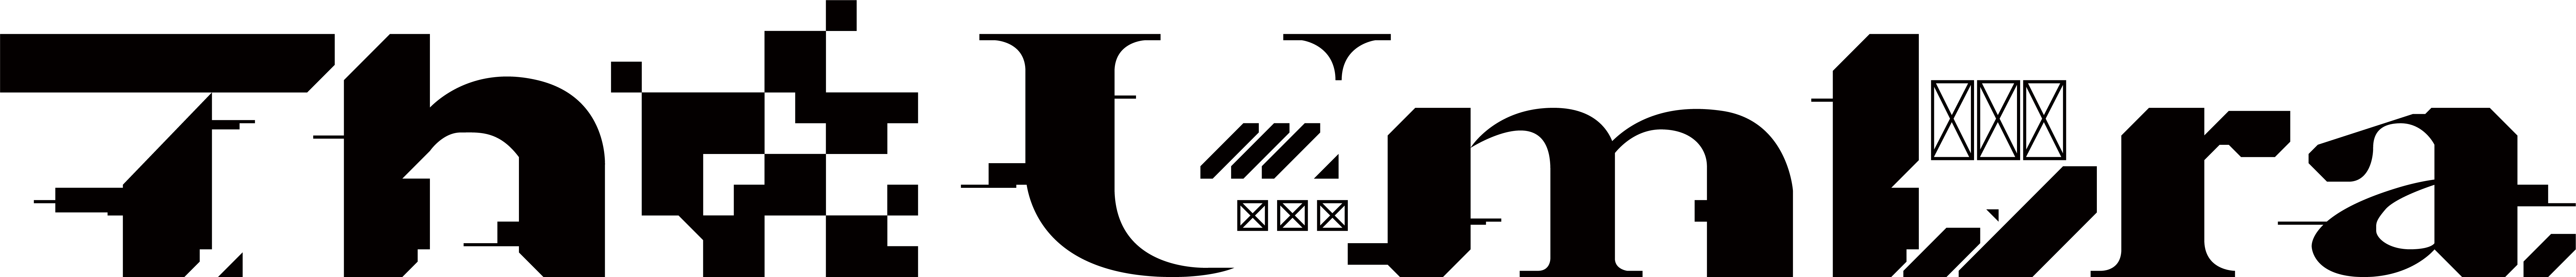 The Umbra logo